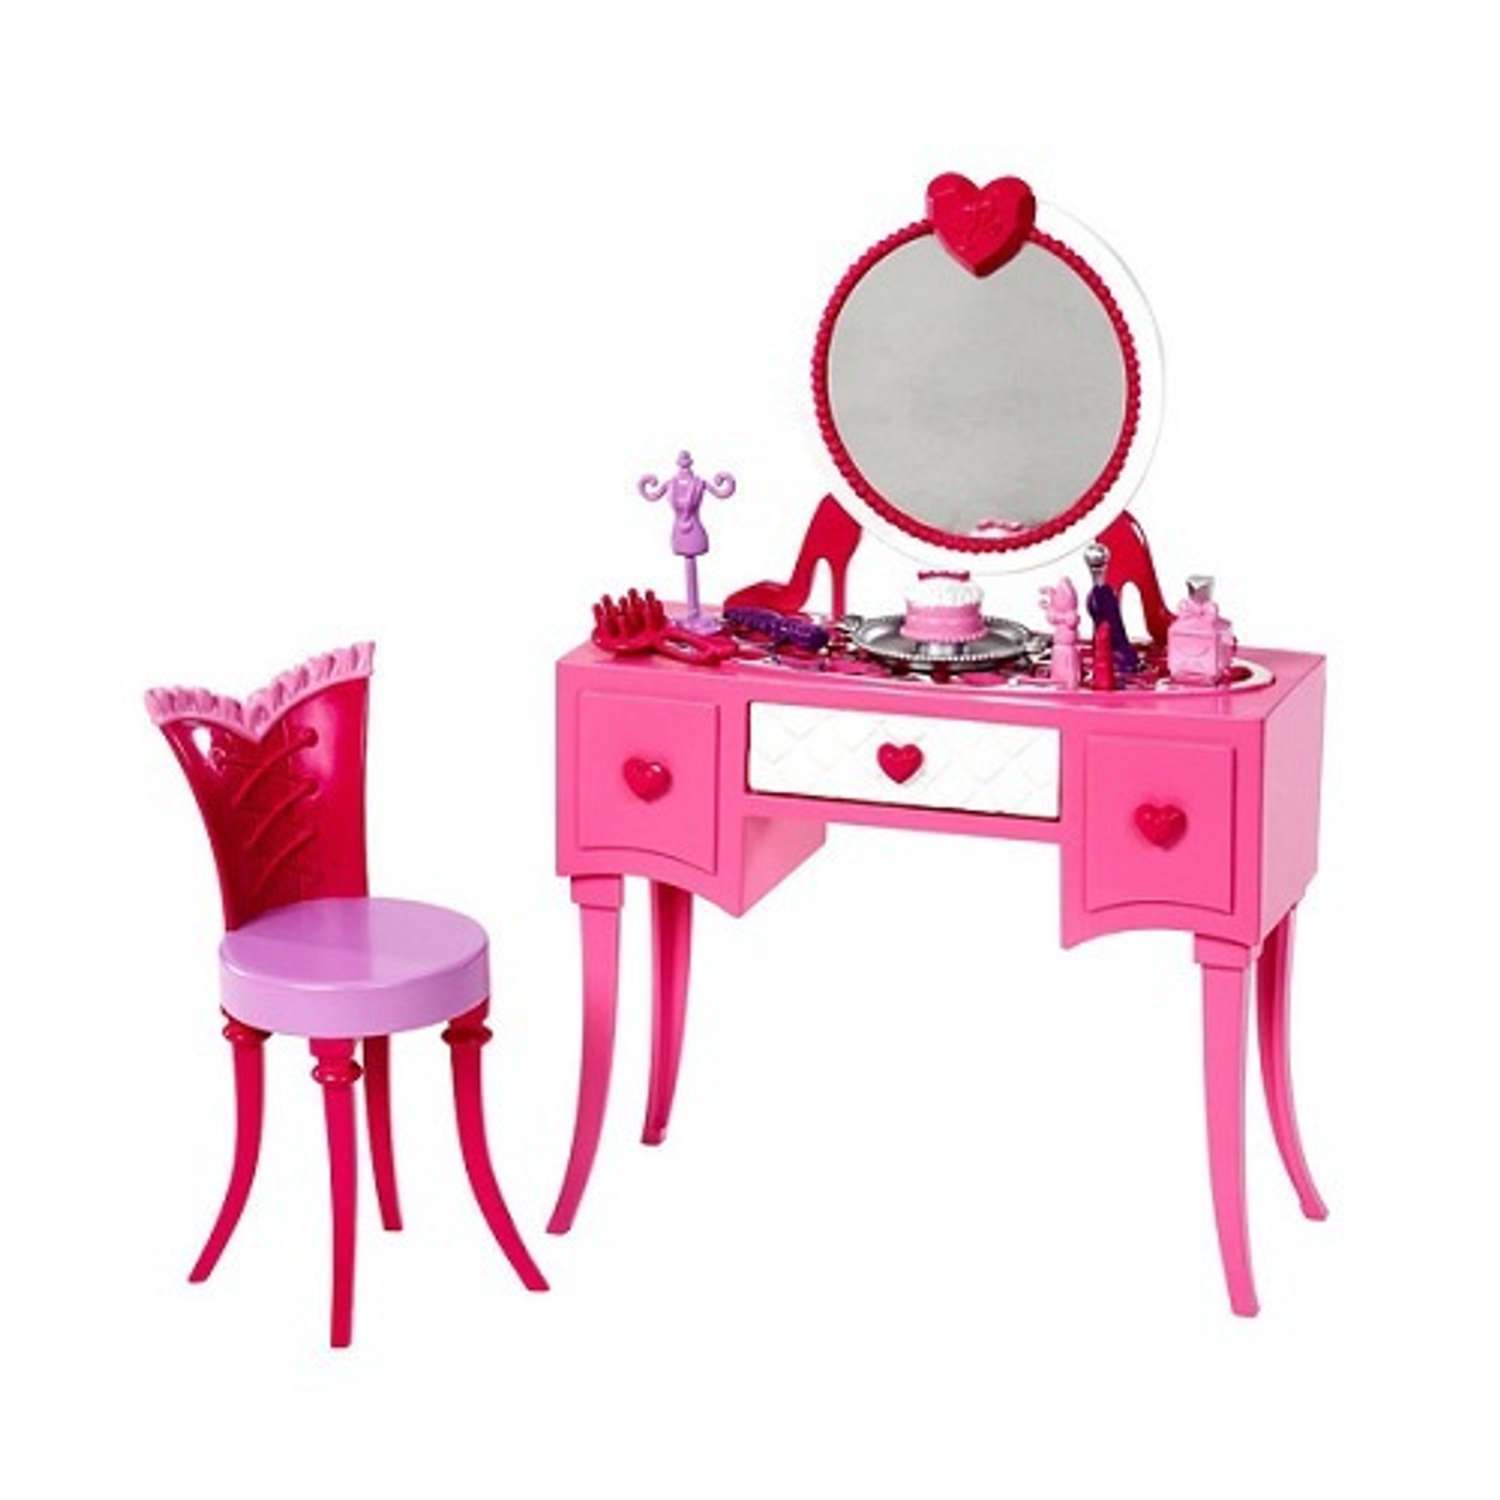 Наборы мебели Barbie Компактная комната Barbie в ассортименте X7936 - фото 2